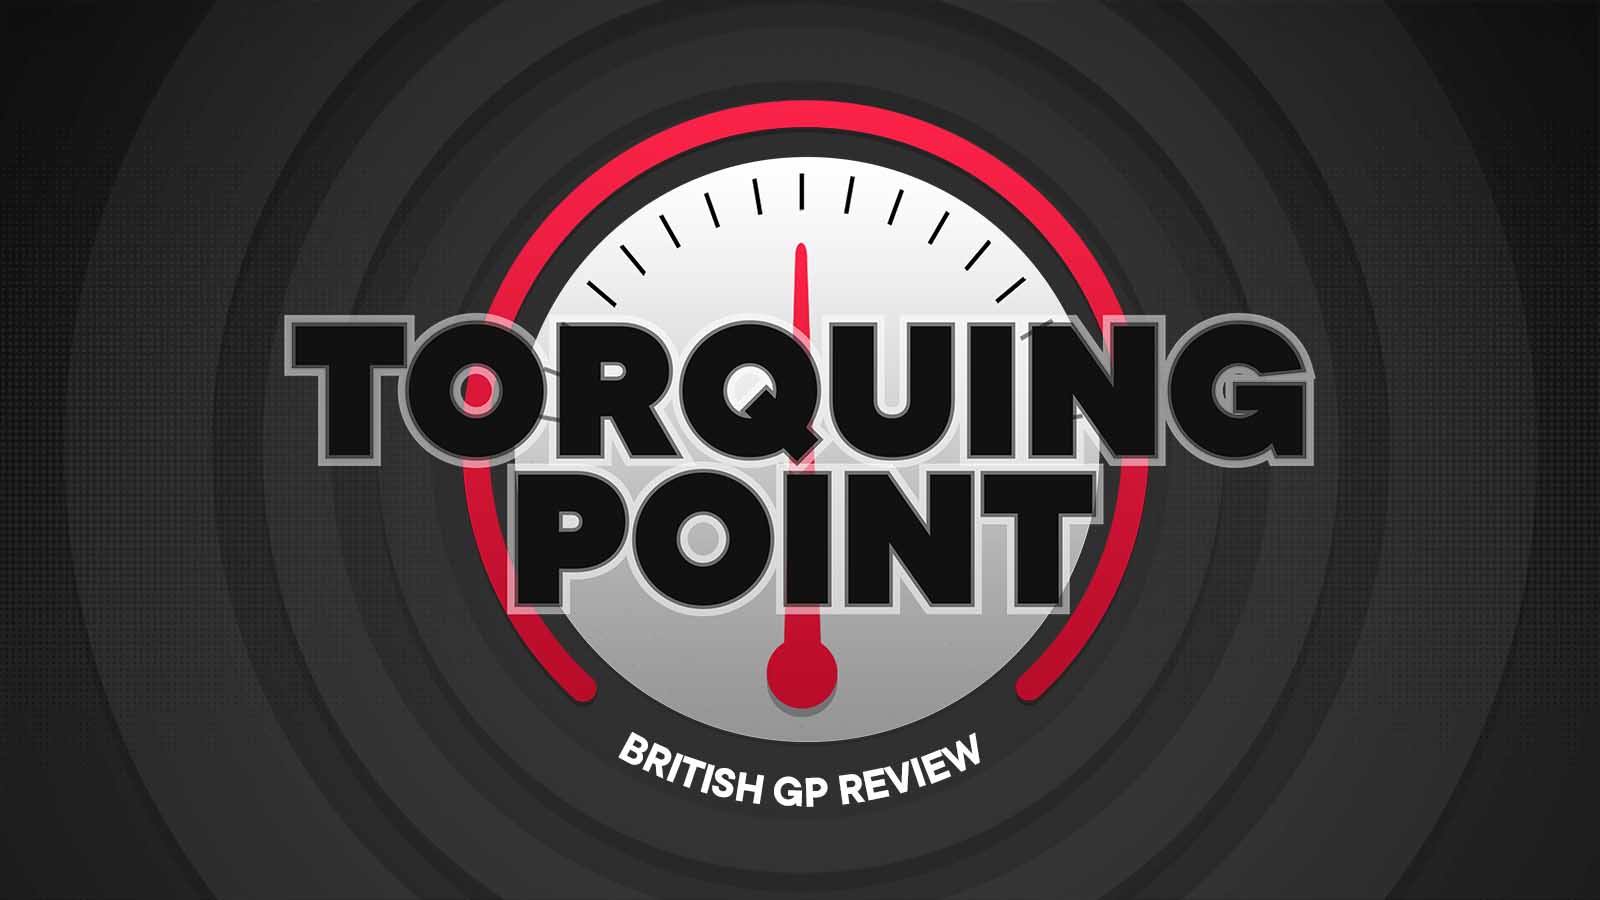 Torquing Point logo. Silverstone July 2022.